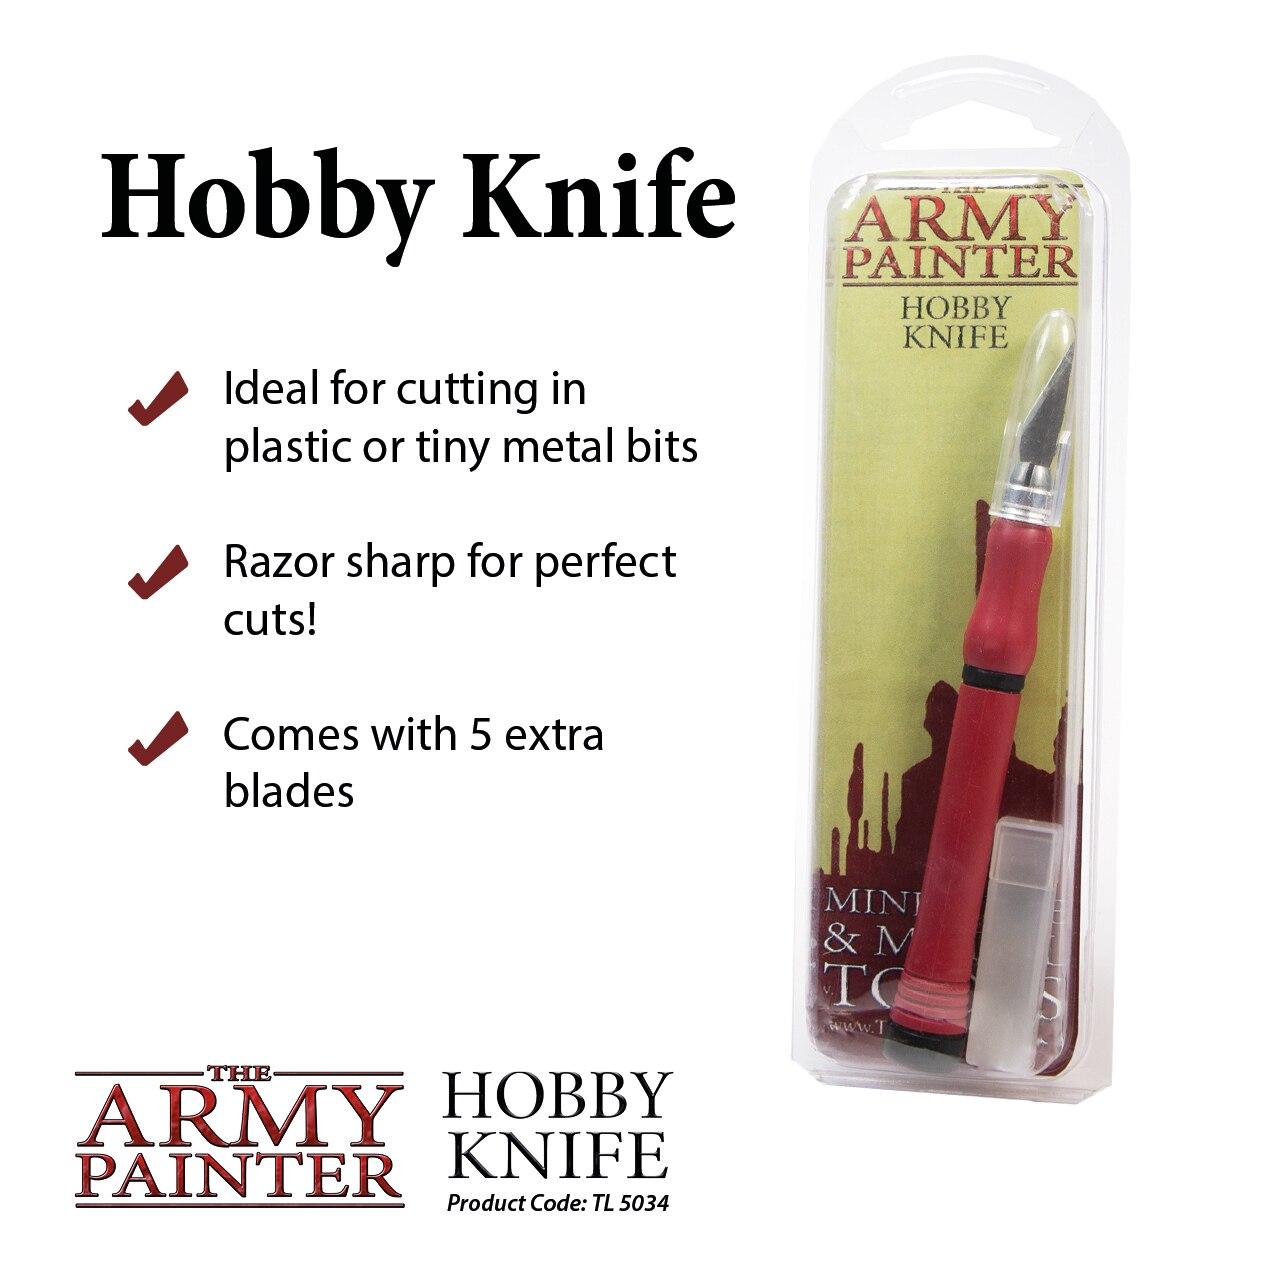 Tool - Precision Hobby Knife